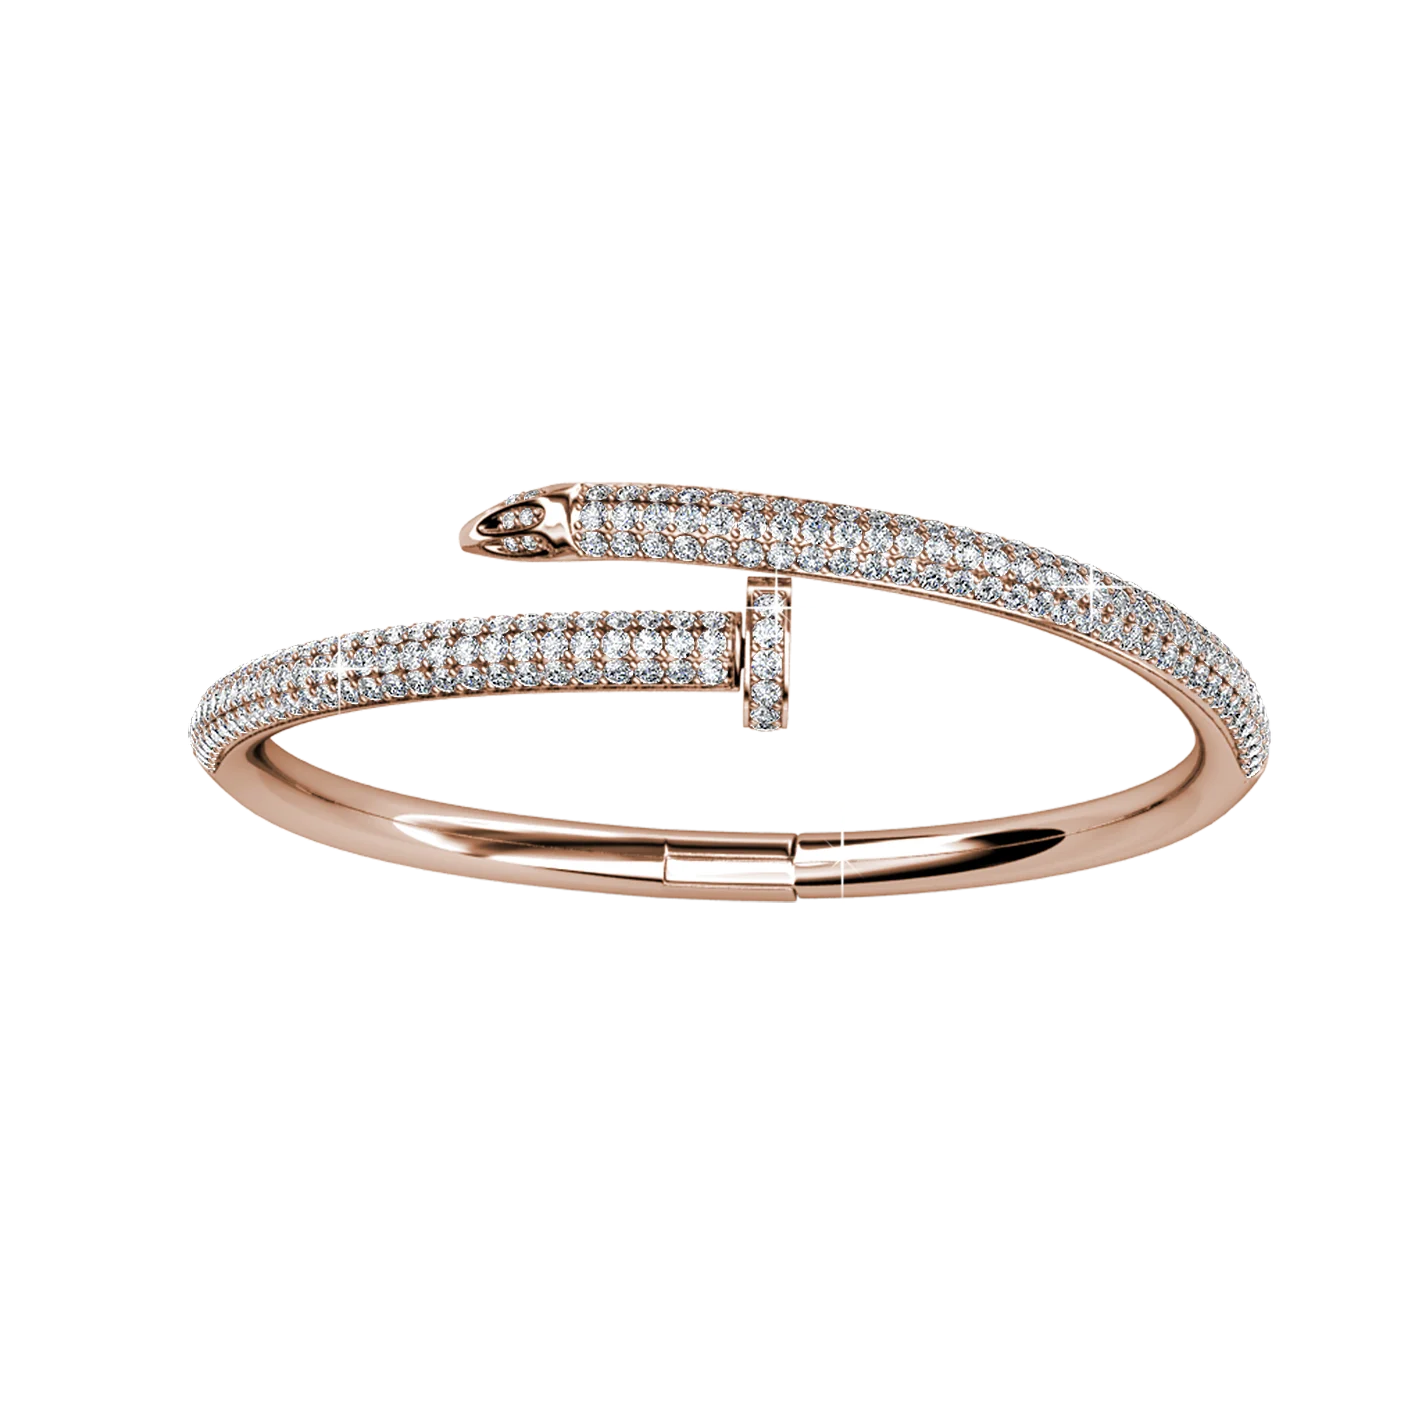 925 Silver Women’s Bangle Bracelet Adjustable  UK Seller